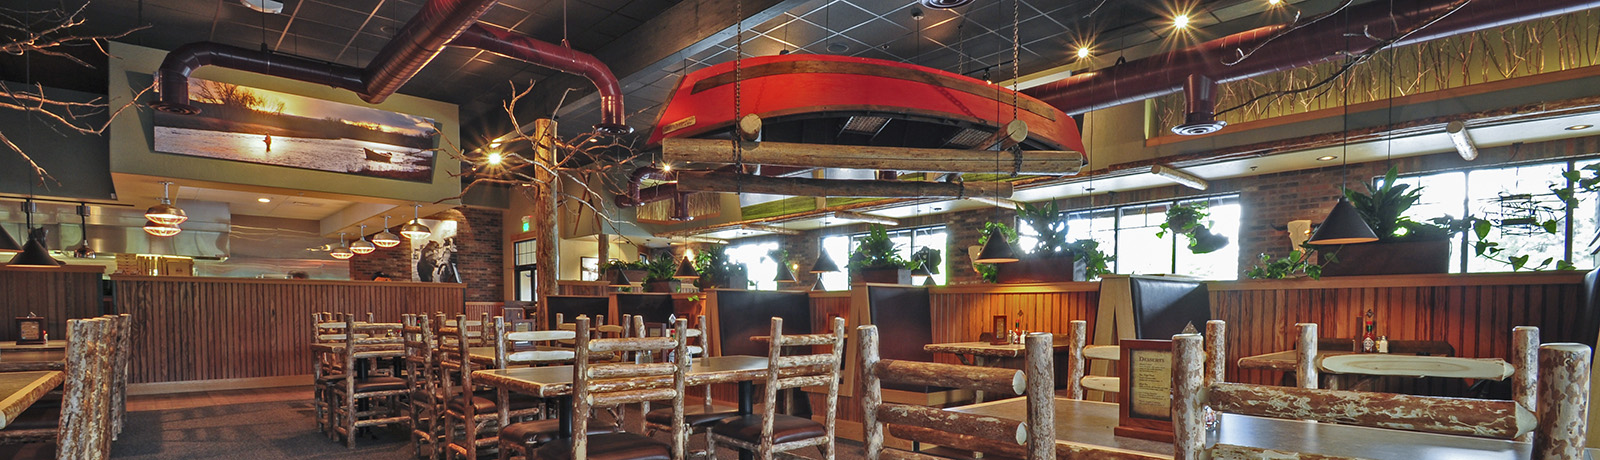 MacKenzie River Pizza, Grill & Pub Nevada Street